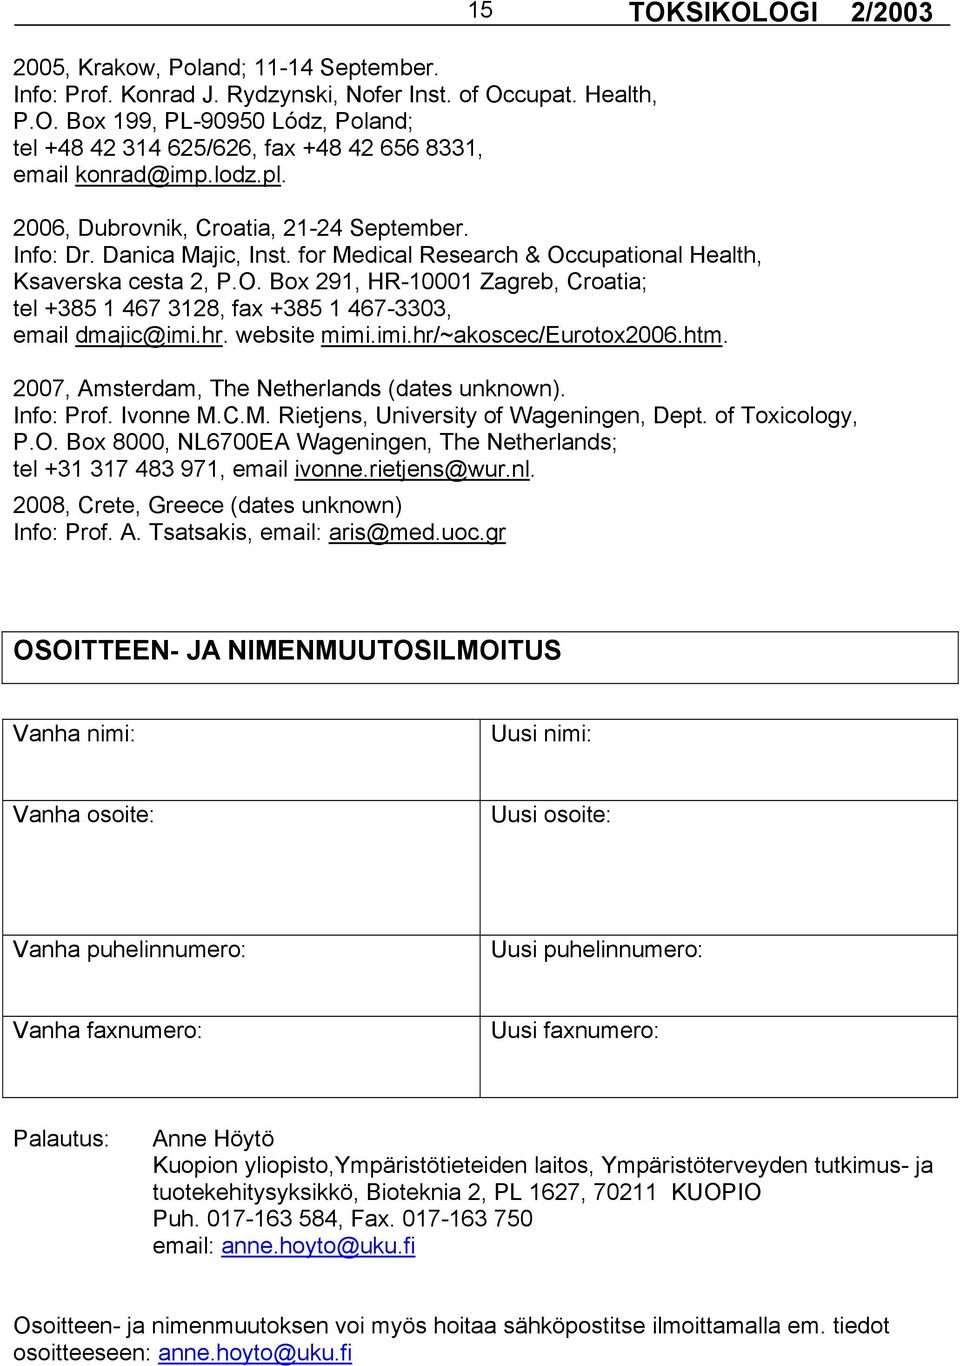 cupational Health, Ksaverska cesta 2, P.O. Box 291, HR-10001 Zagreb, Croatia; tel +385 1 467 3128, fax +385 1 467-3303, email dmajic@imi.hr. website mimi.imi.hr/~akoscec/eurotox2006.htm.